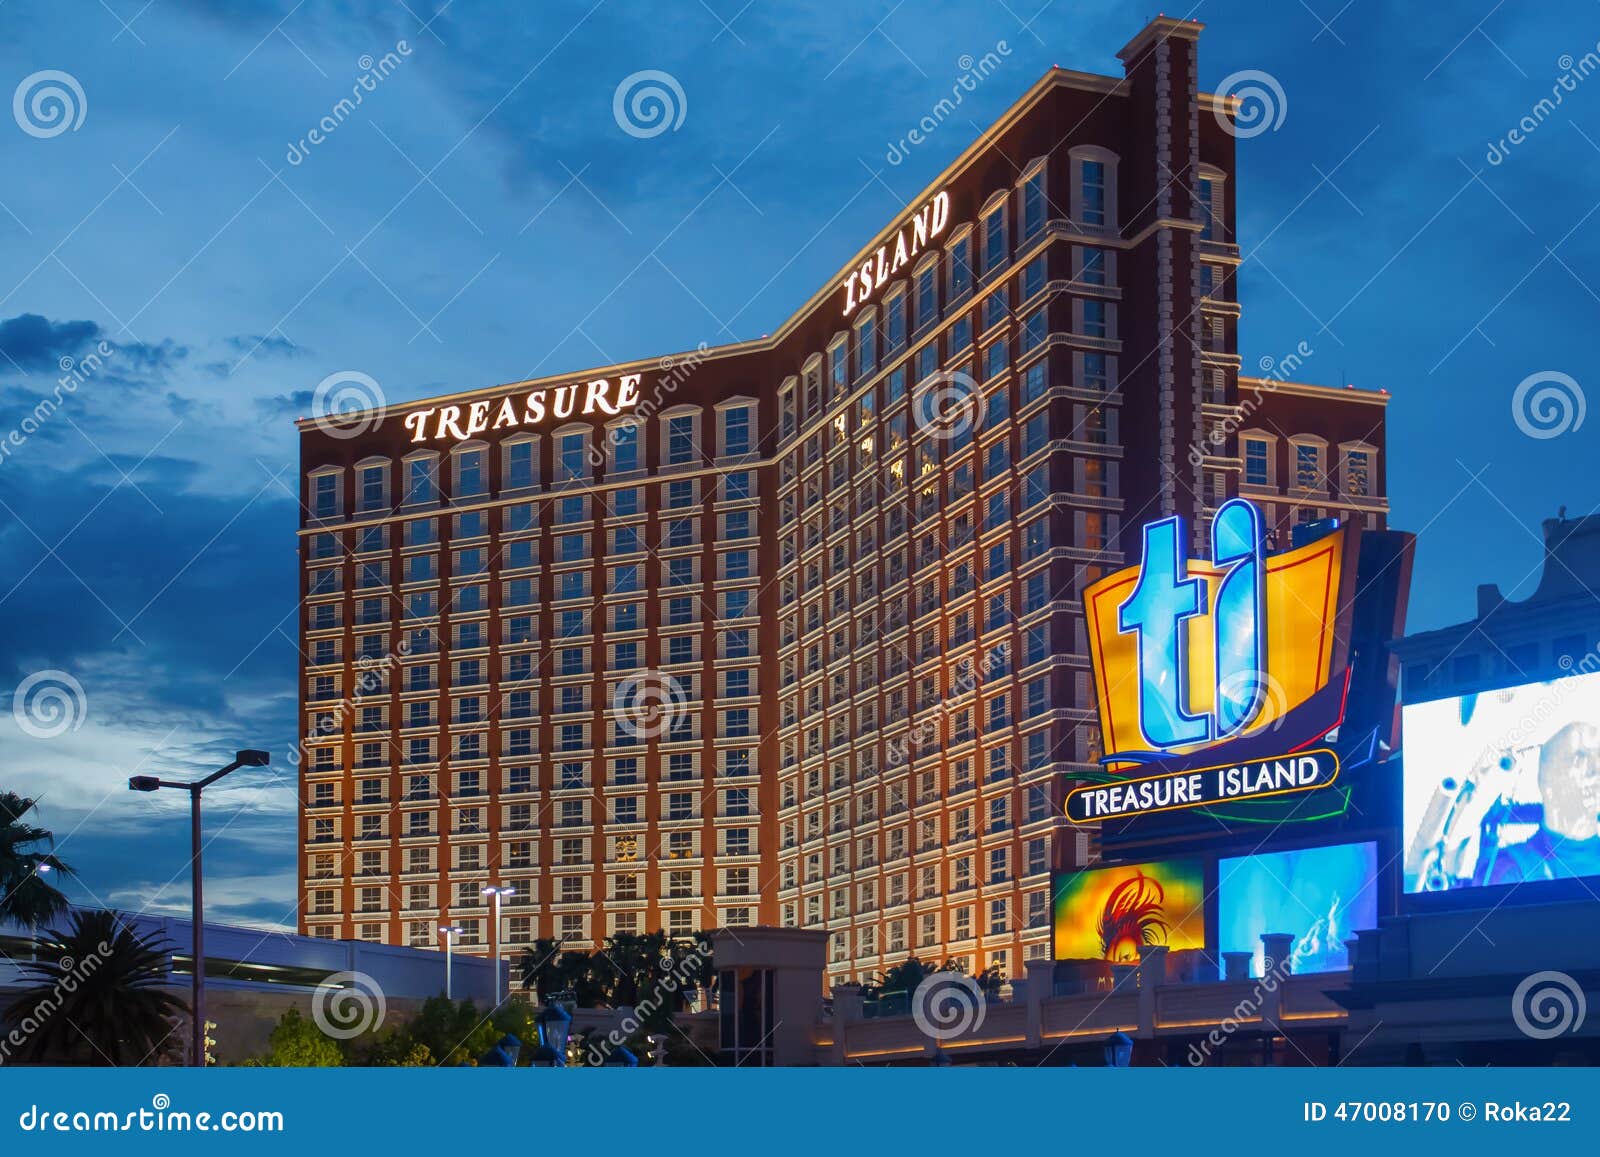 Treasure Island Hotel In Las Vegas Editorial Image Image